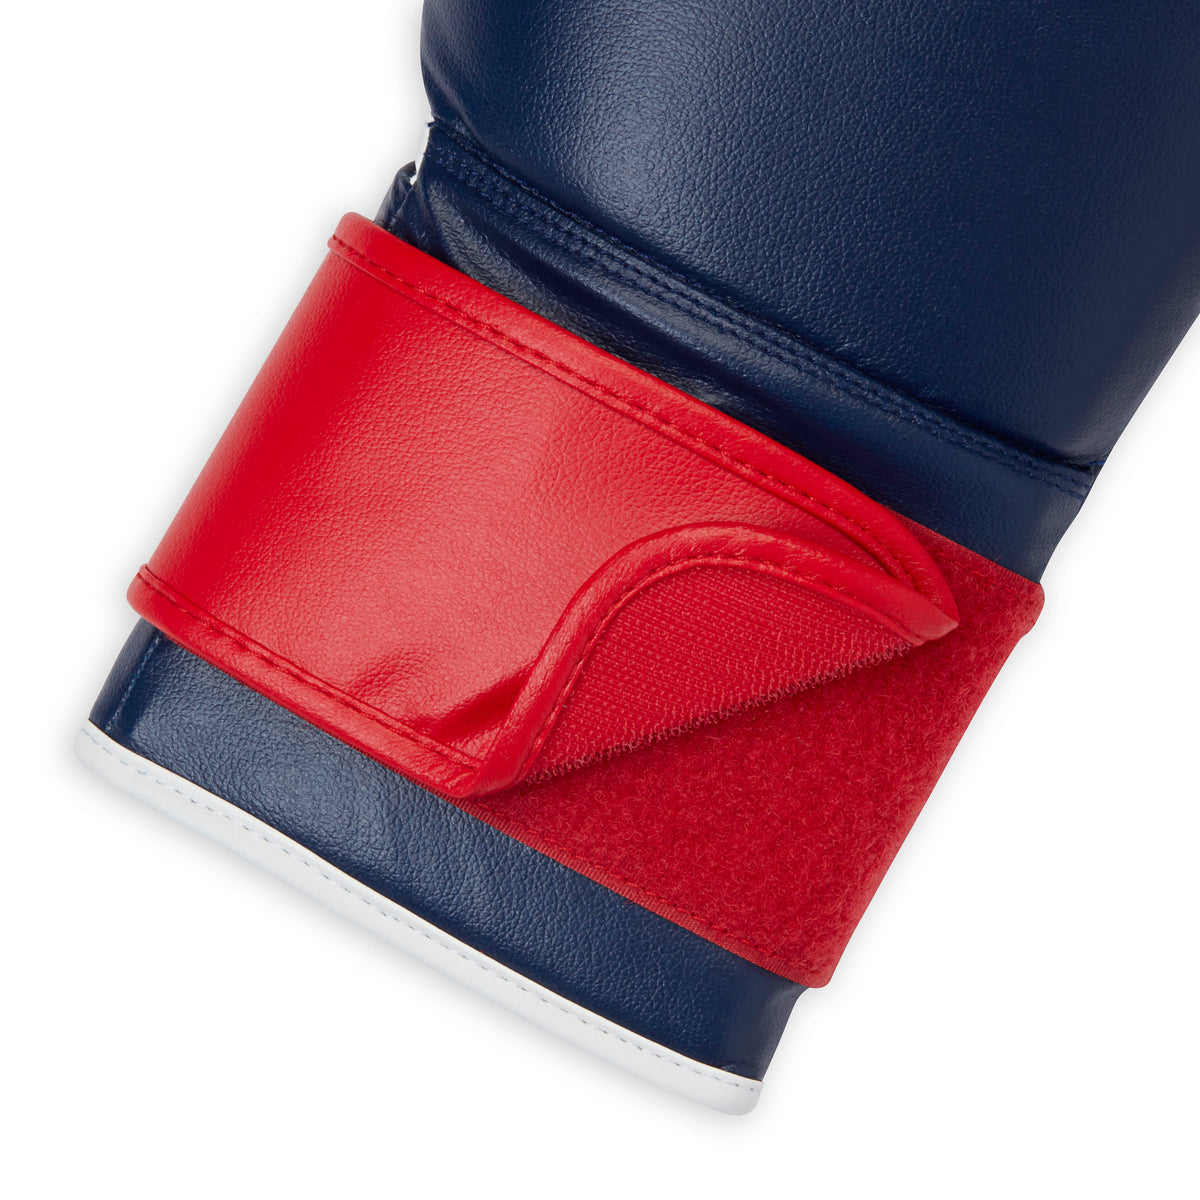 FILA Boxing Gloves (10oz) Navy/Red velcro closeup